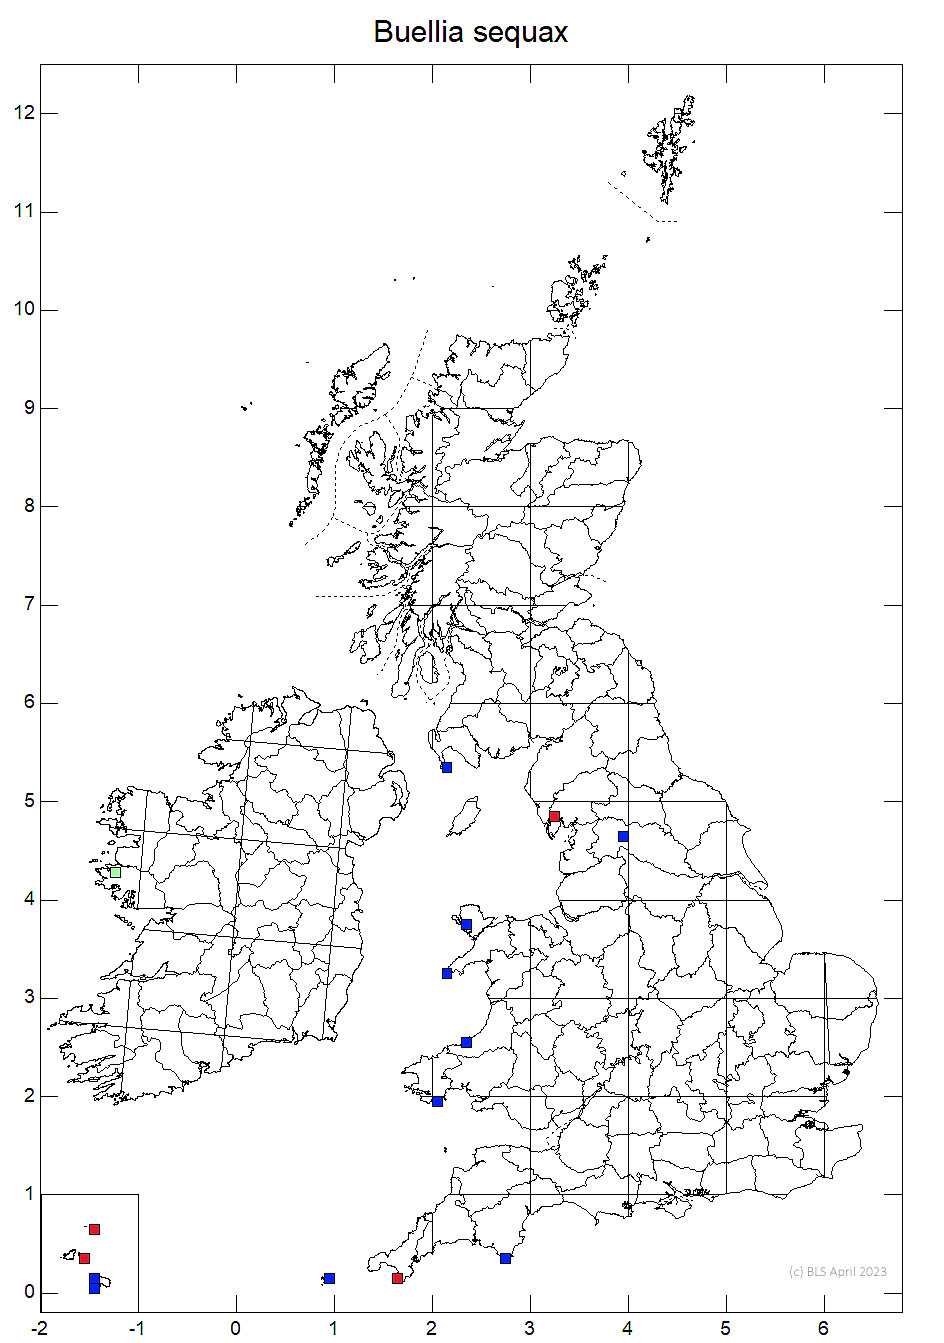 Buellia sequax 10km sq distribution map